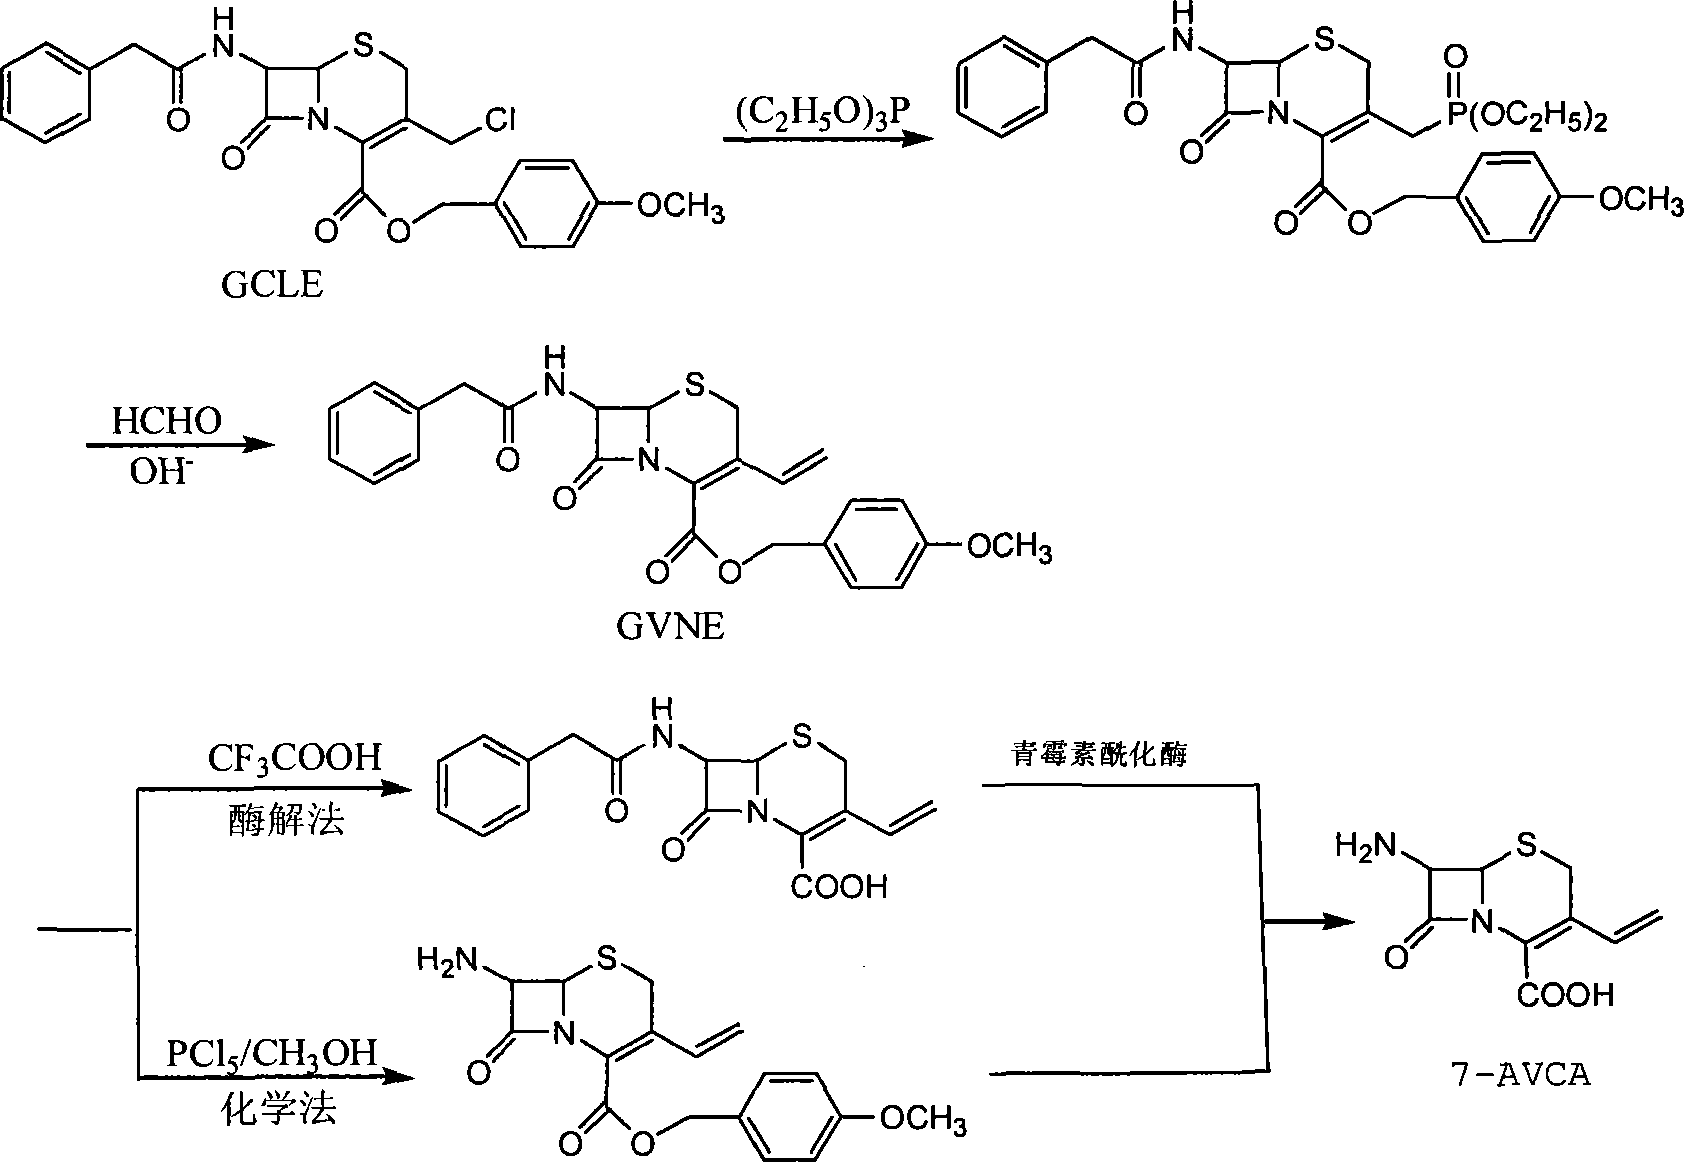 Method for preparing 7-amido-3-vinyl cethalosporanic acid